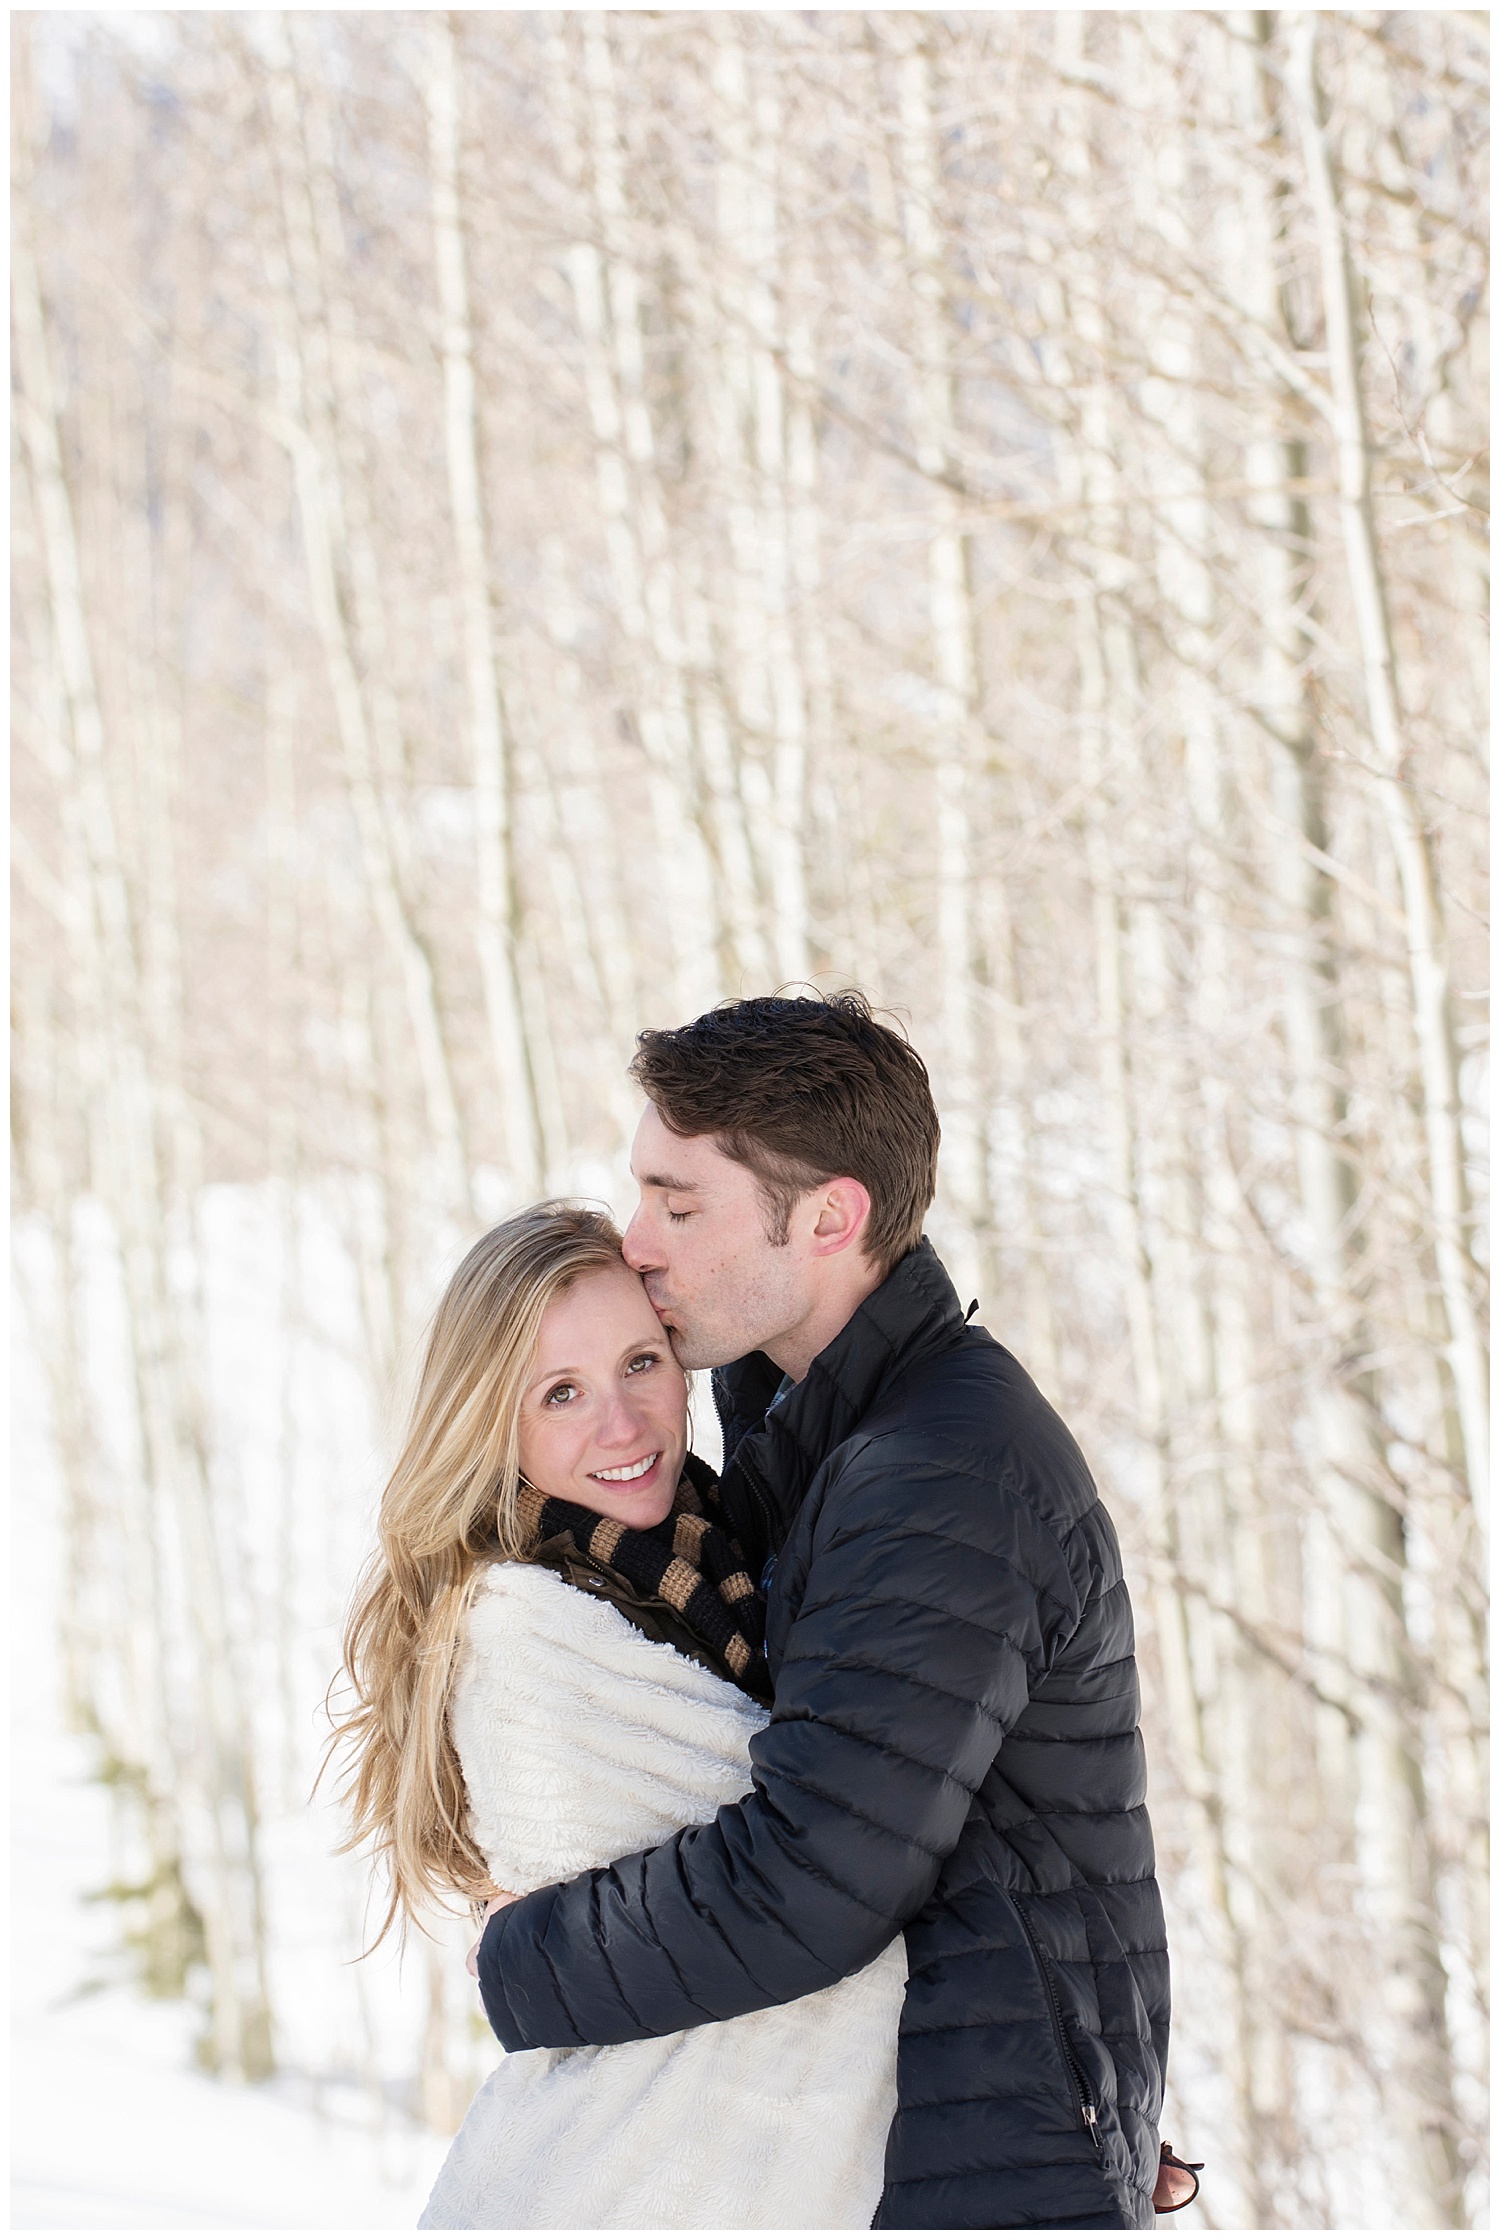 Man Embracing Woman | Lake Dillon Colorado Engagement Photographer | Farm Wedding Photographer | Apollo Fields Wedding Photojournalism 